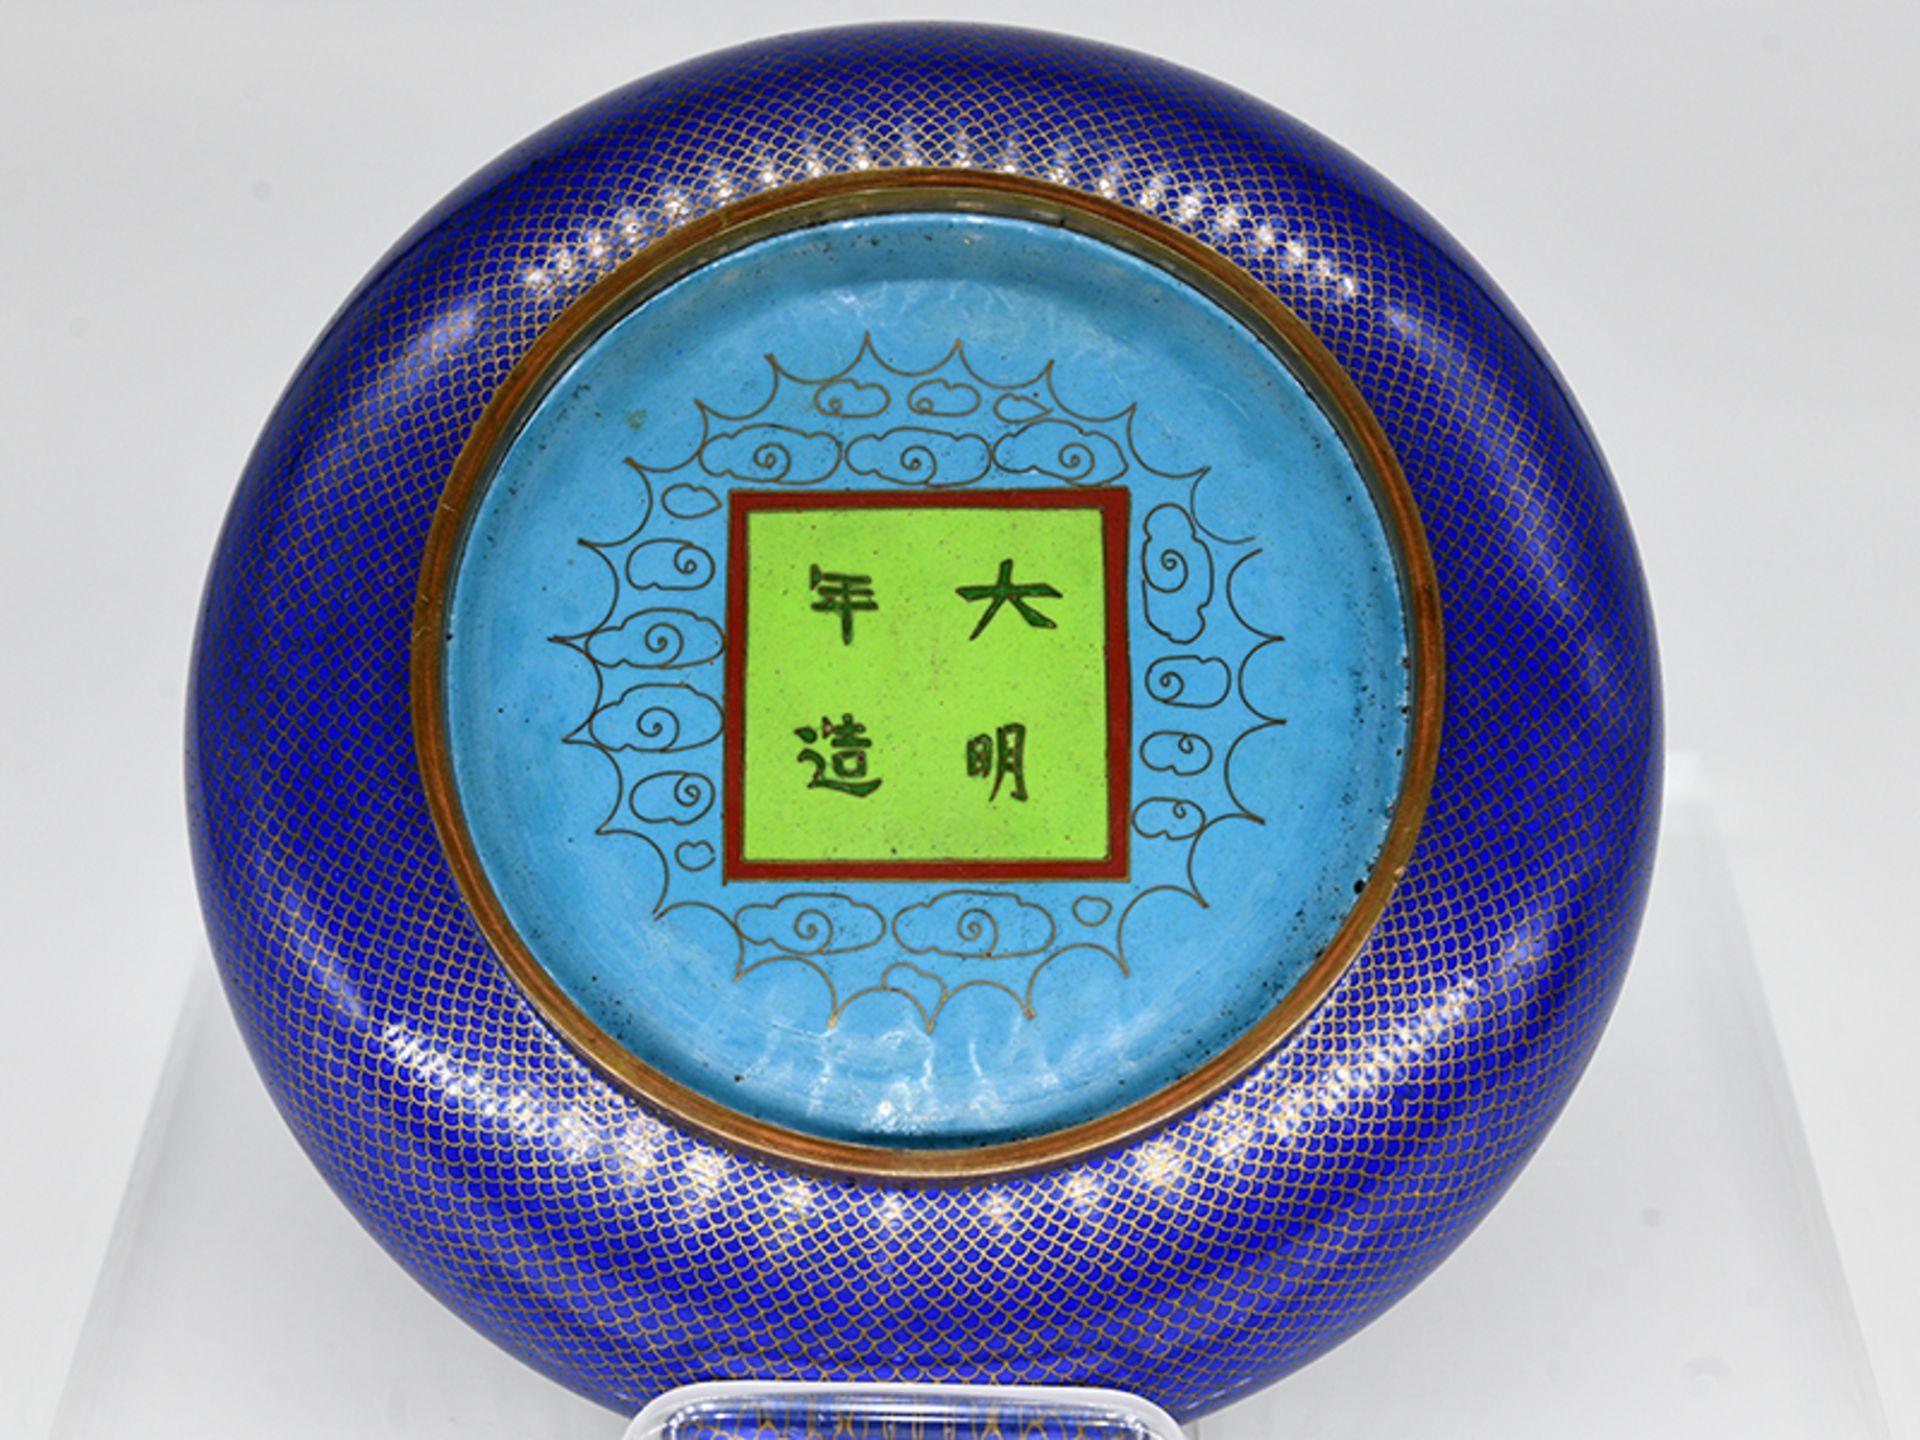 Cloisonné-Schale; China; 19. Jh.Kupfer/Messing mit blau-goldfarbigem Emaille-Cloisonné-Dekor; - Image 4 of 7